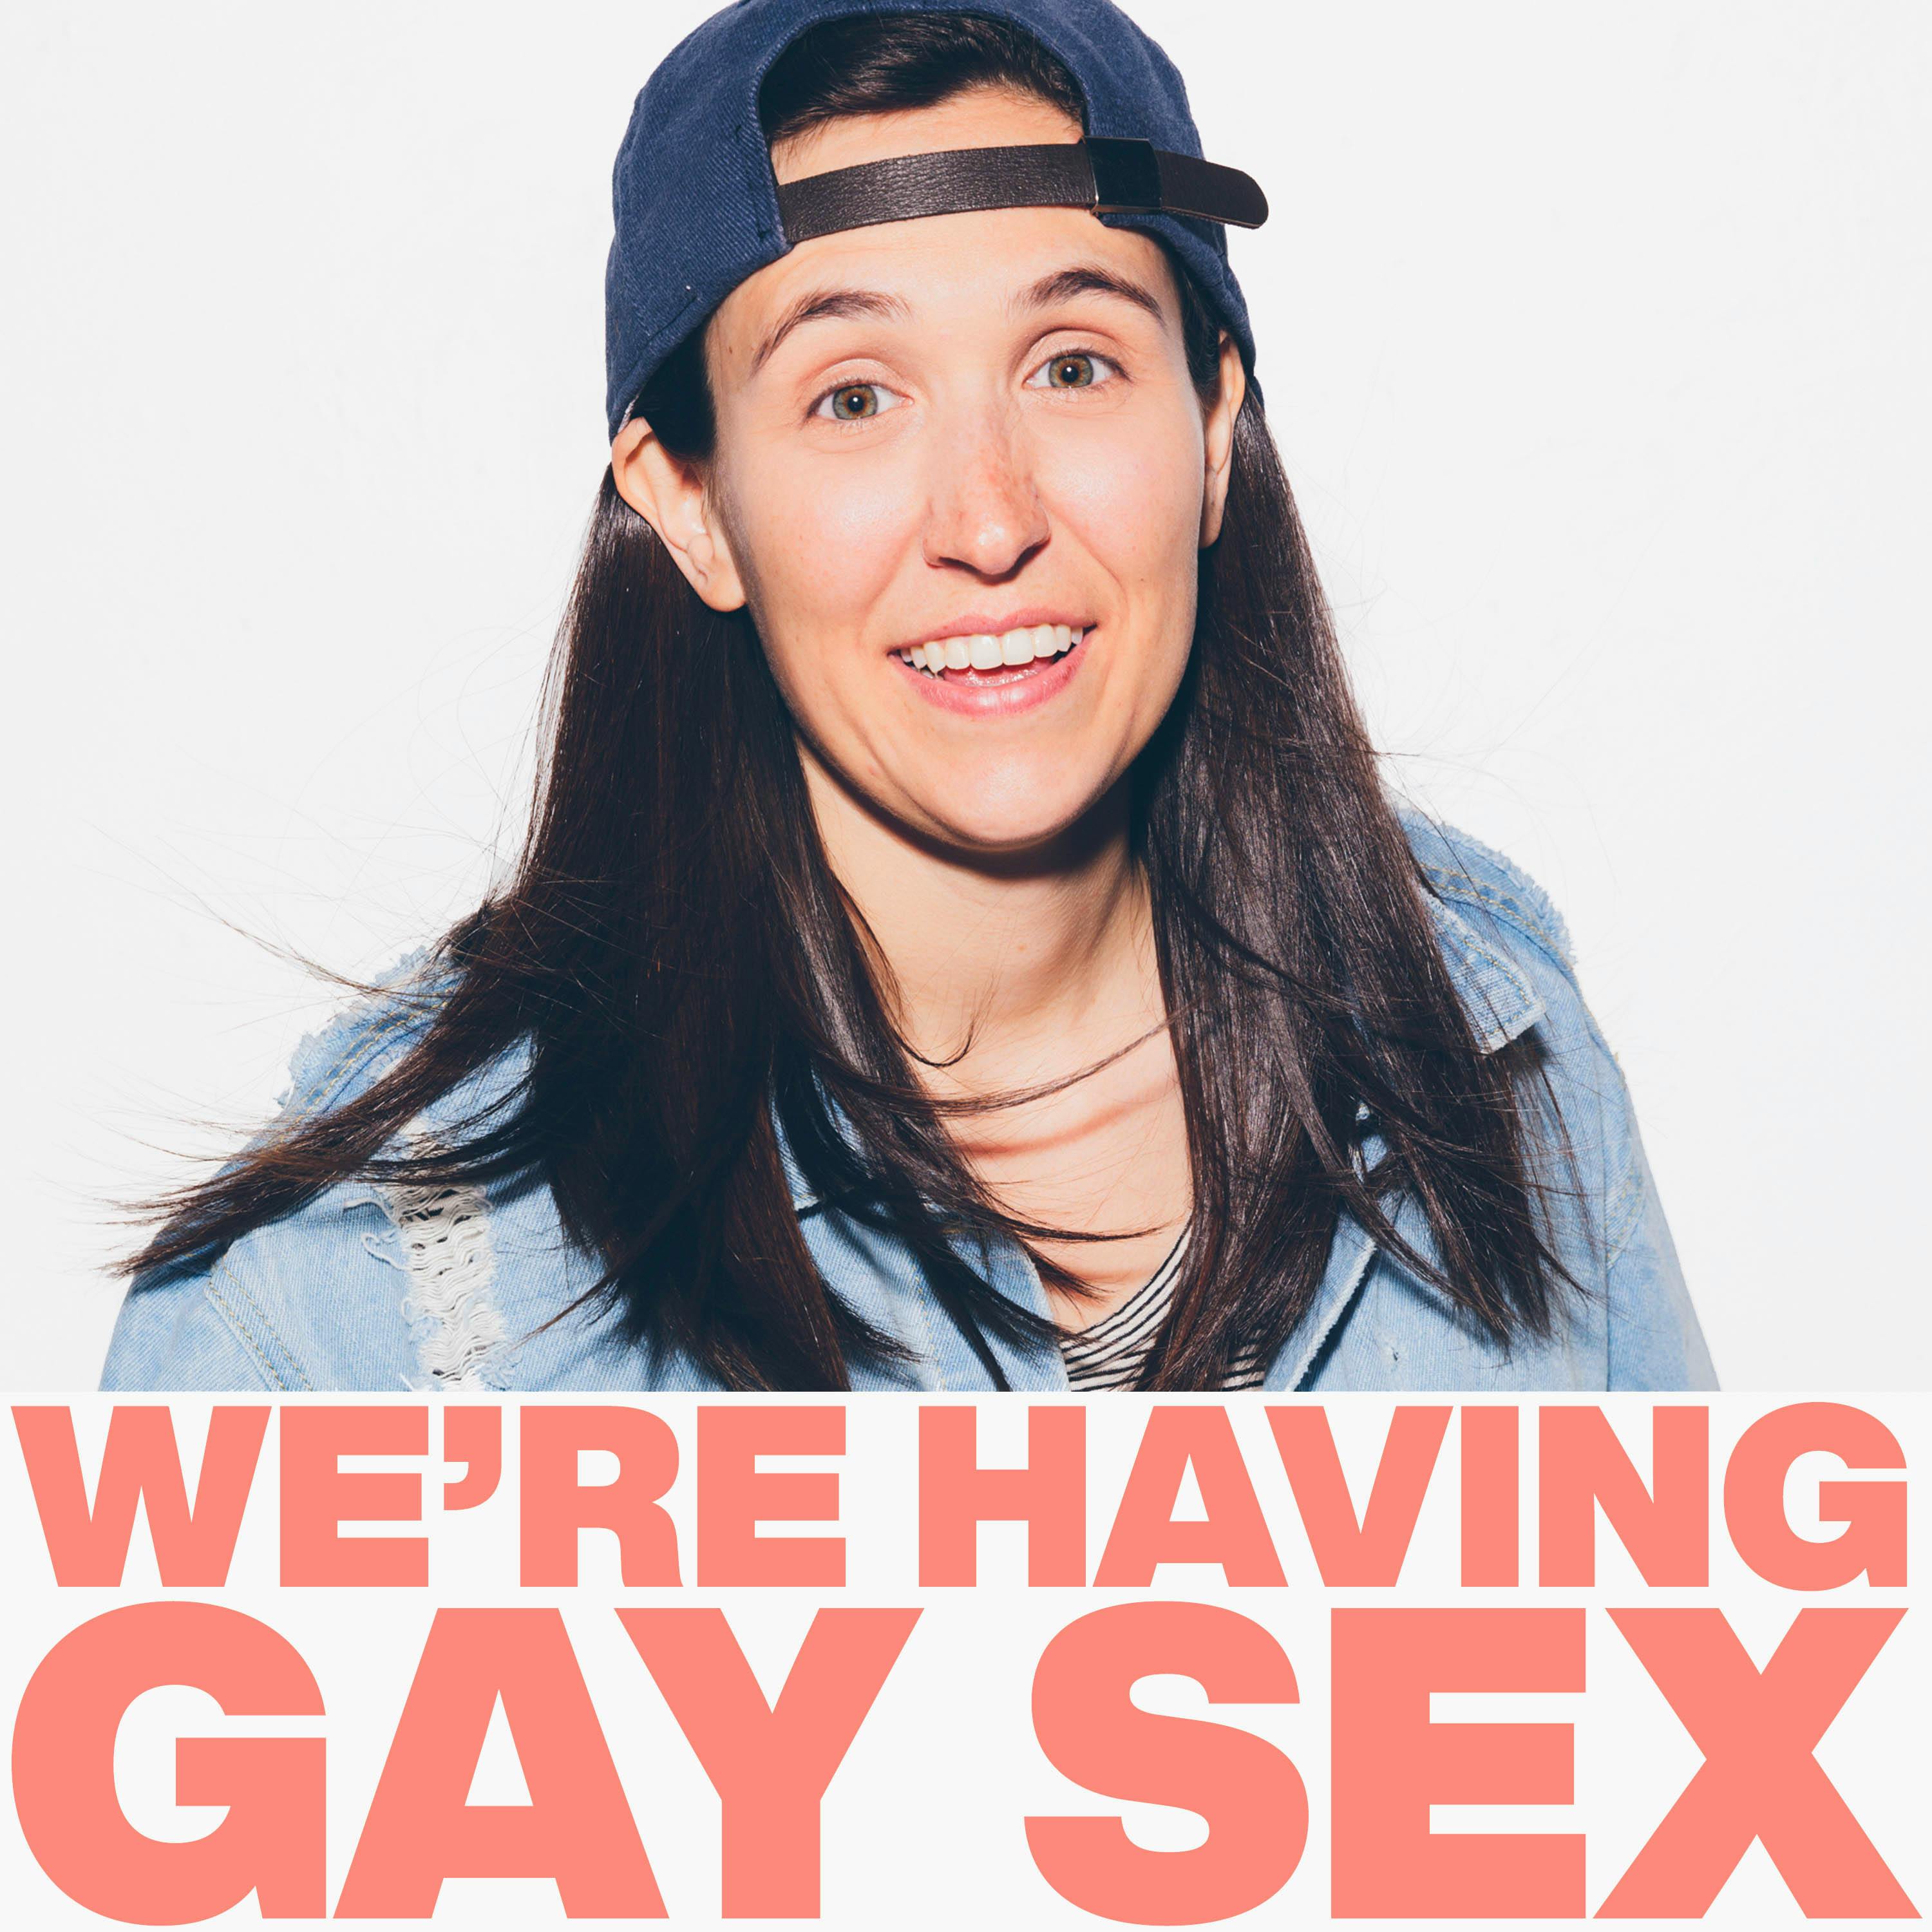 We're Having Gay Sex - Hannah Berner Needs a “Full-Service” Hair Removal